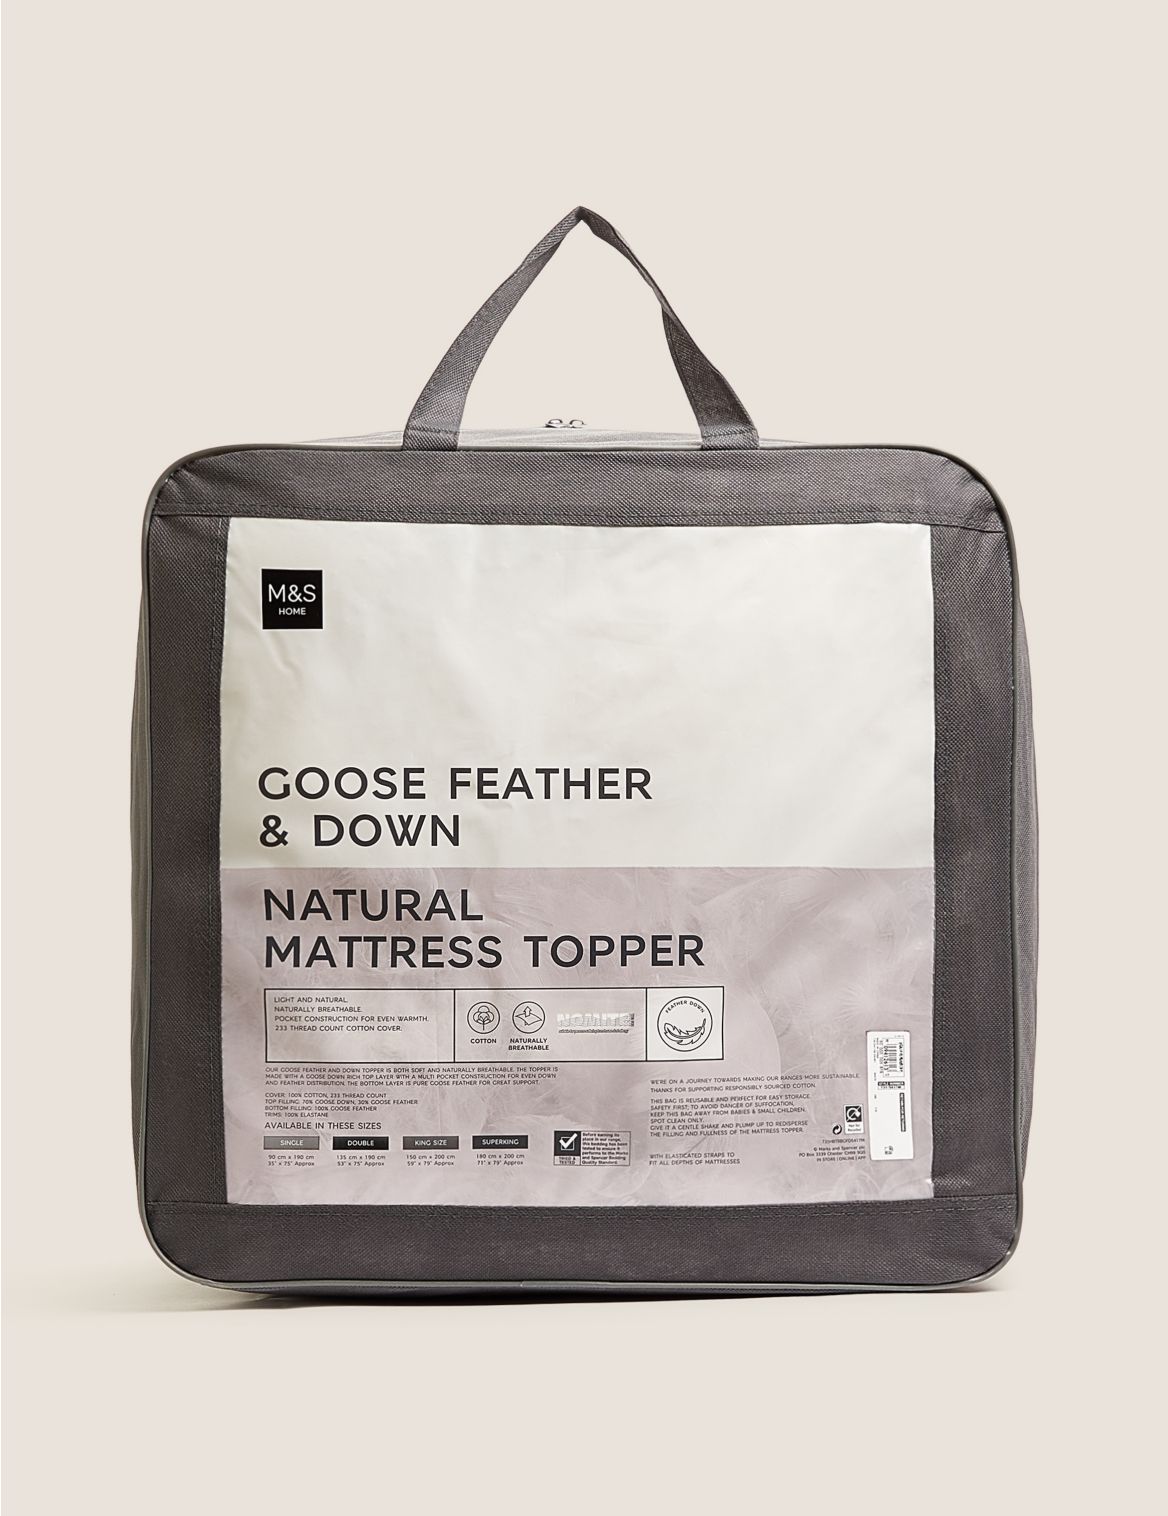 Goose Feather & Down Mattress Topper white